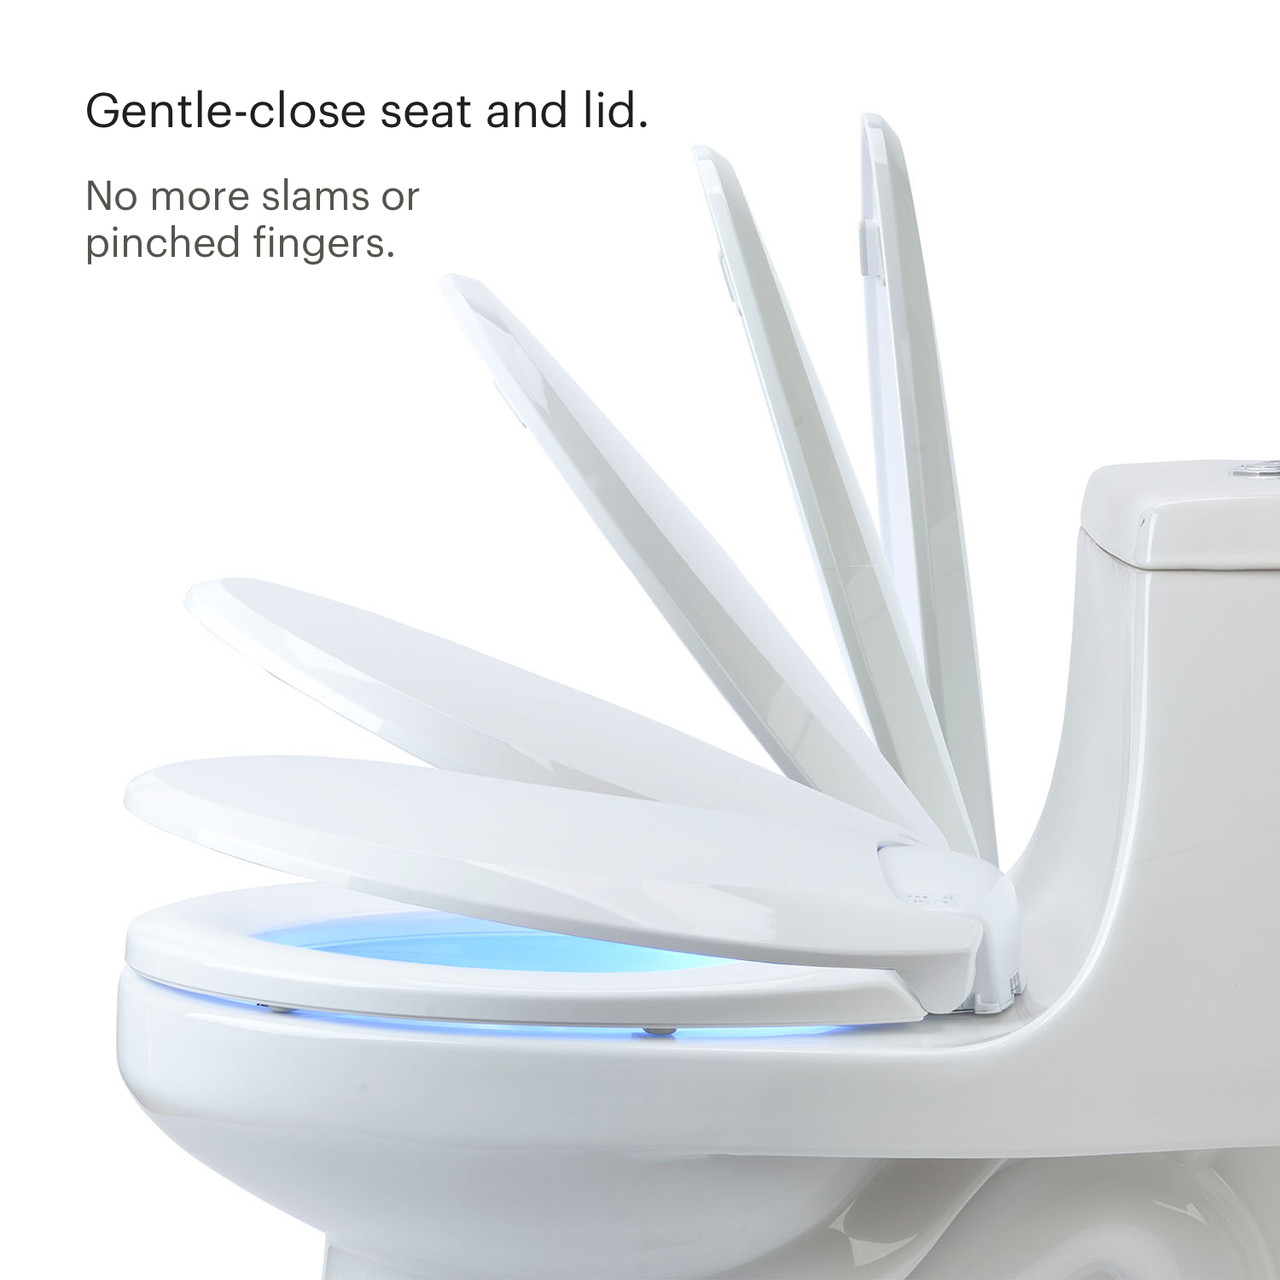 https://cdn11.bigcommerce.com/s-mpfo2gcqca/images/stencil/1280x1280/products/337/4342/Brondell-L60-Lumawarm-toilet-seat-gentle-close-lid__00791.1700496801.jpg?c=1